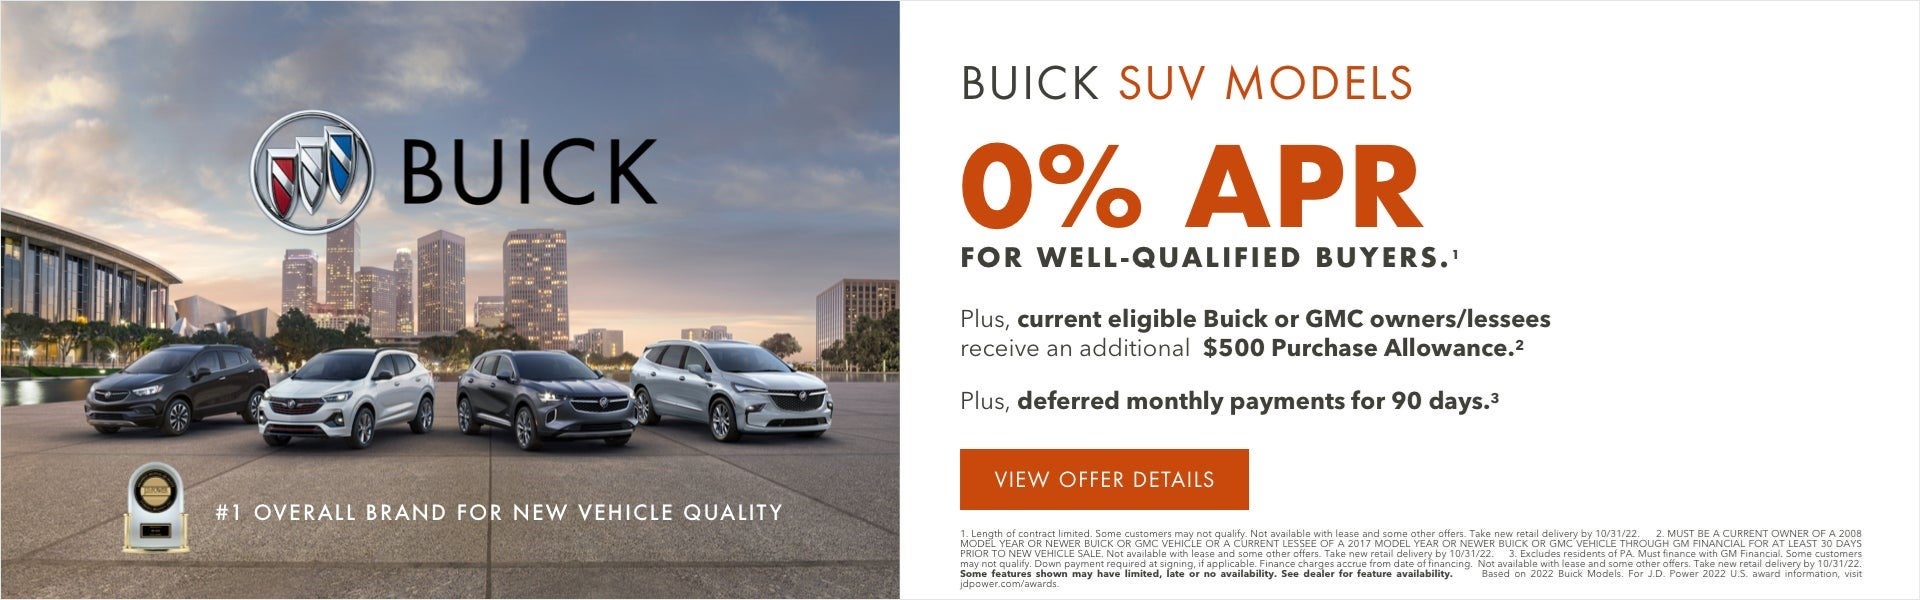 Buick SUV Models 0% APR